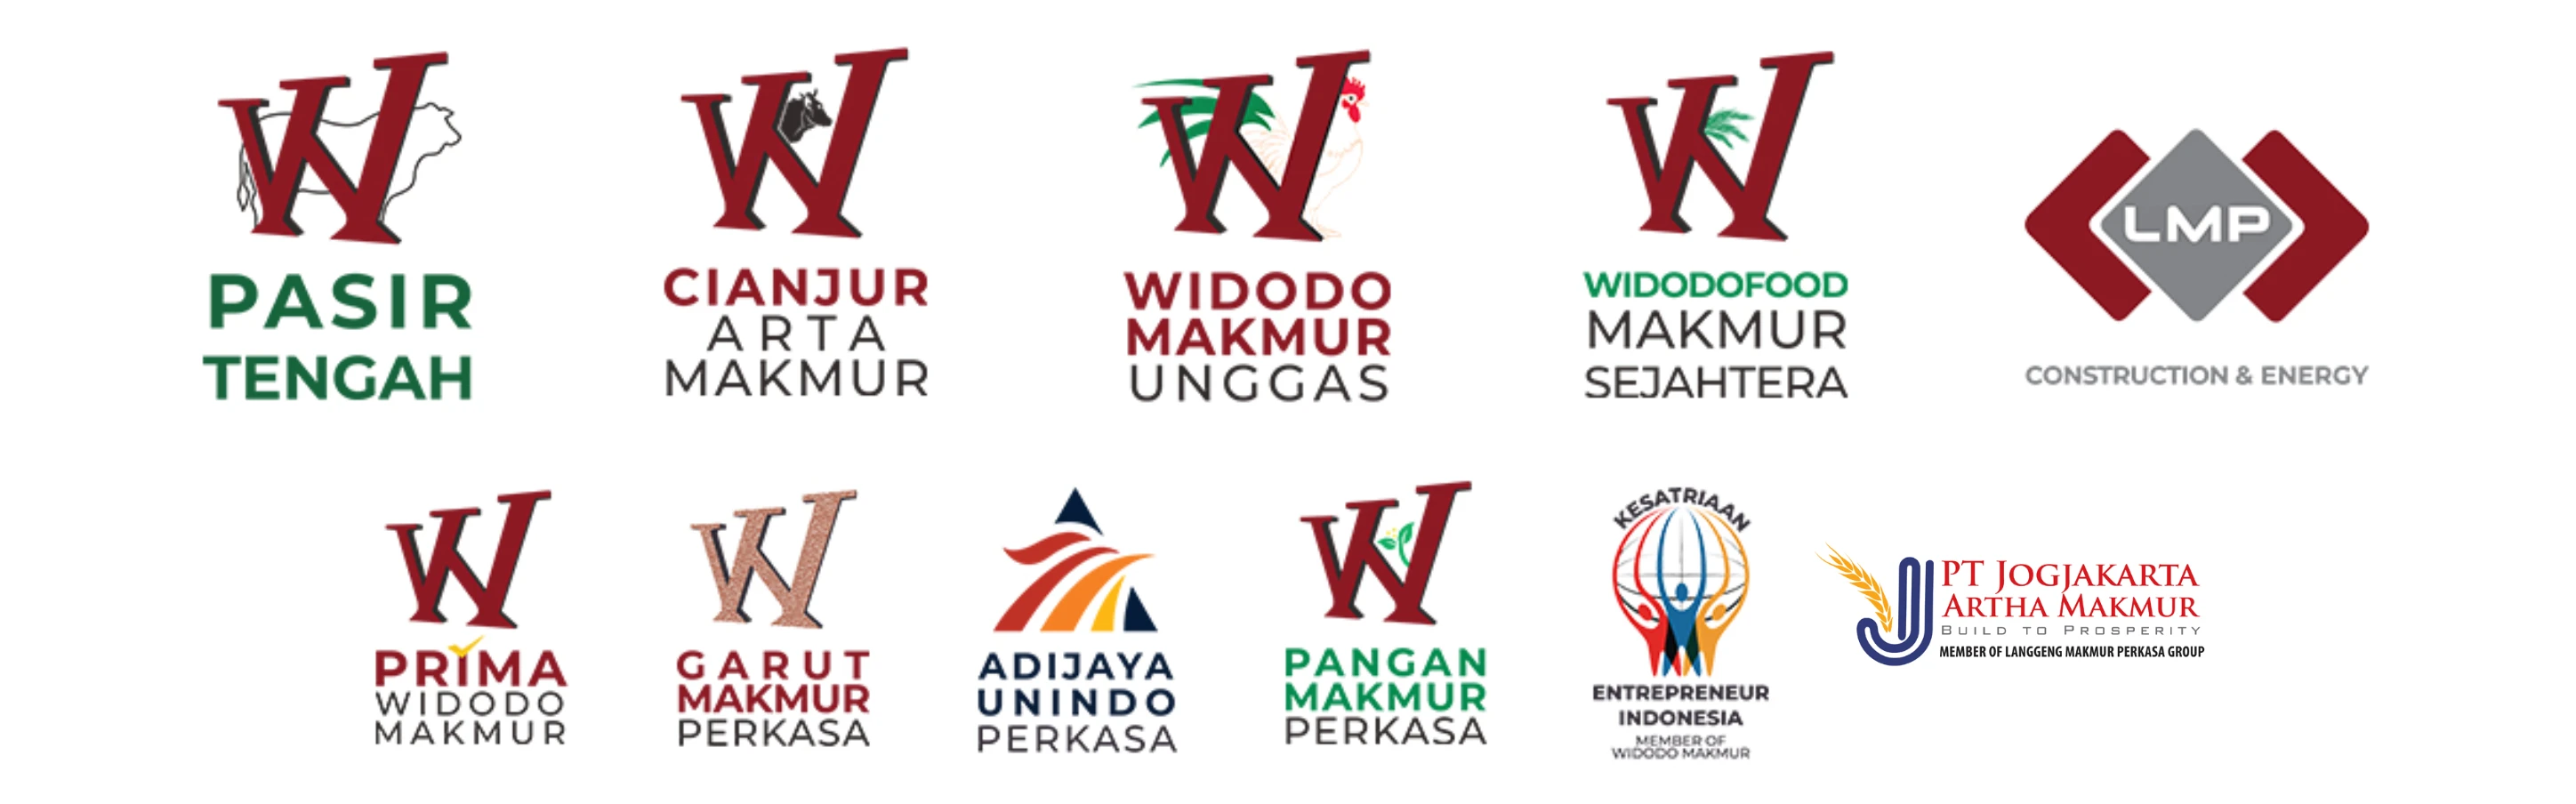 WMP Subsidiaries